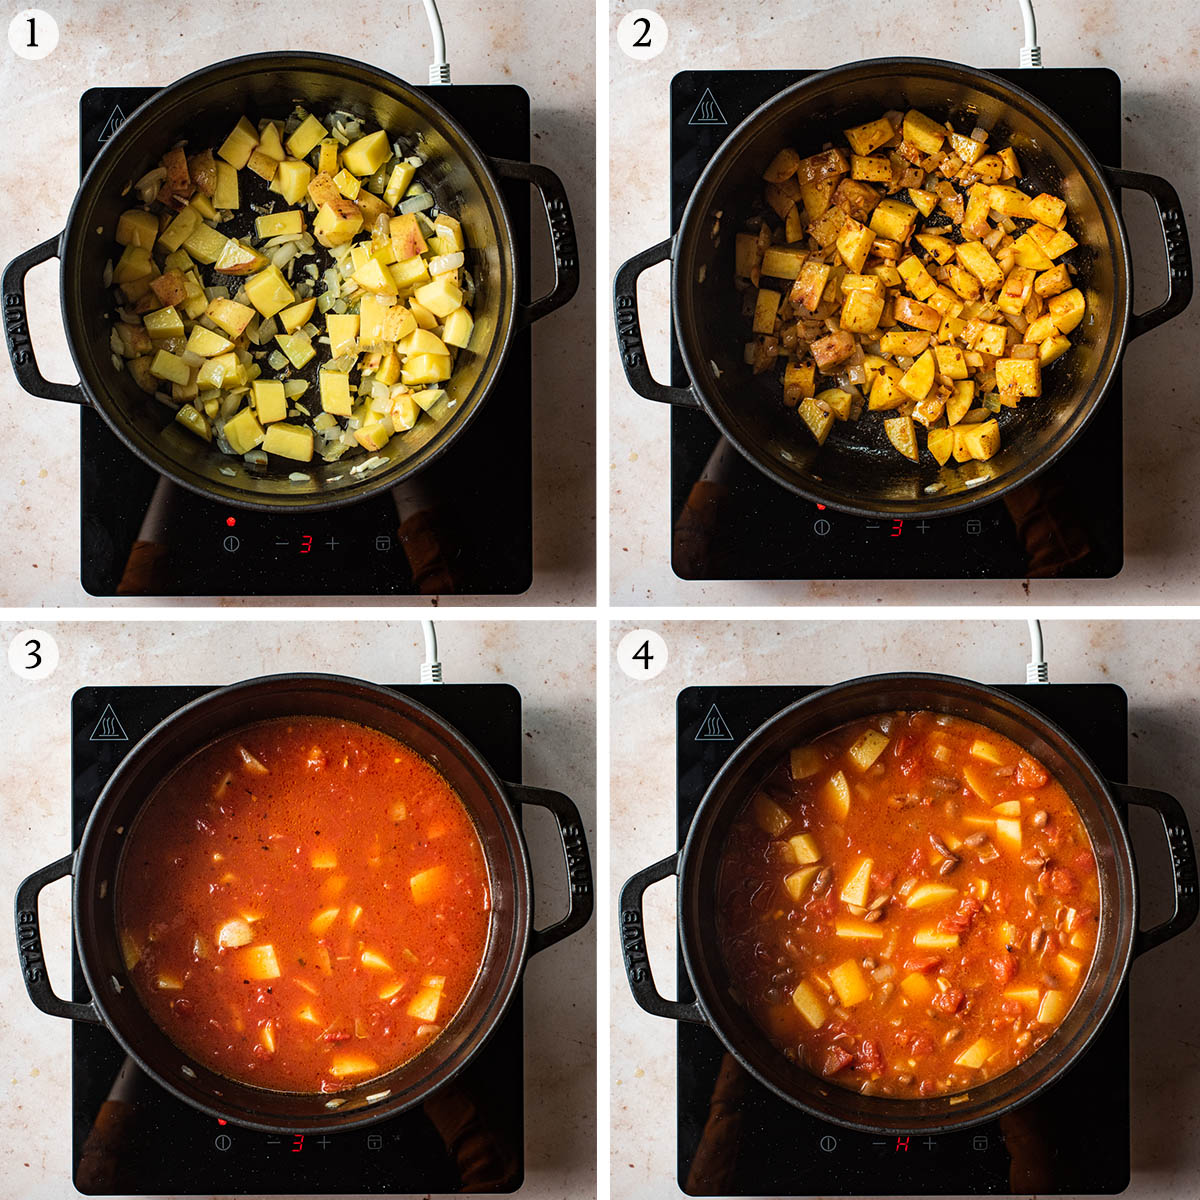 Pinto bean soup steps 1 to 4.